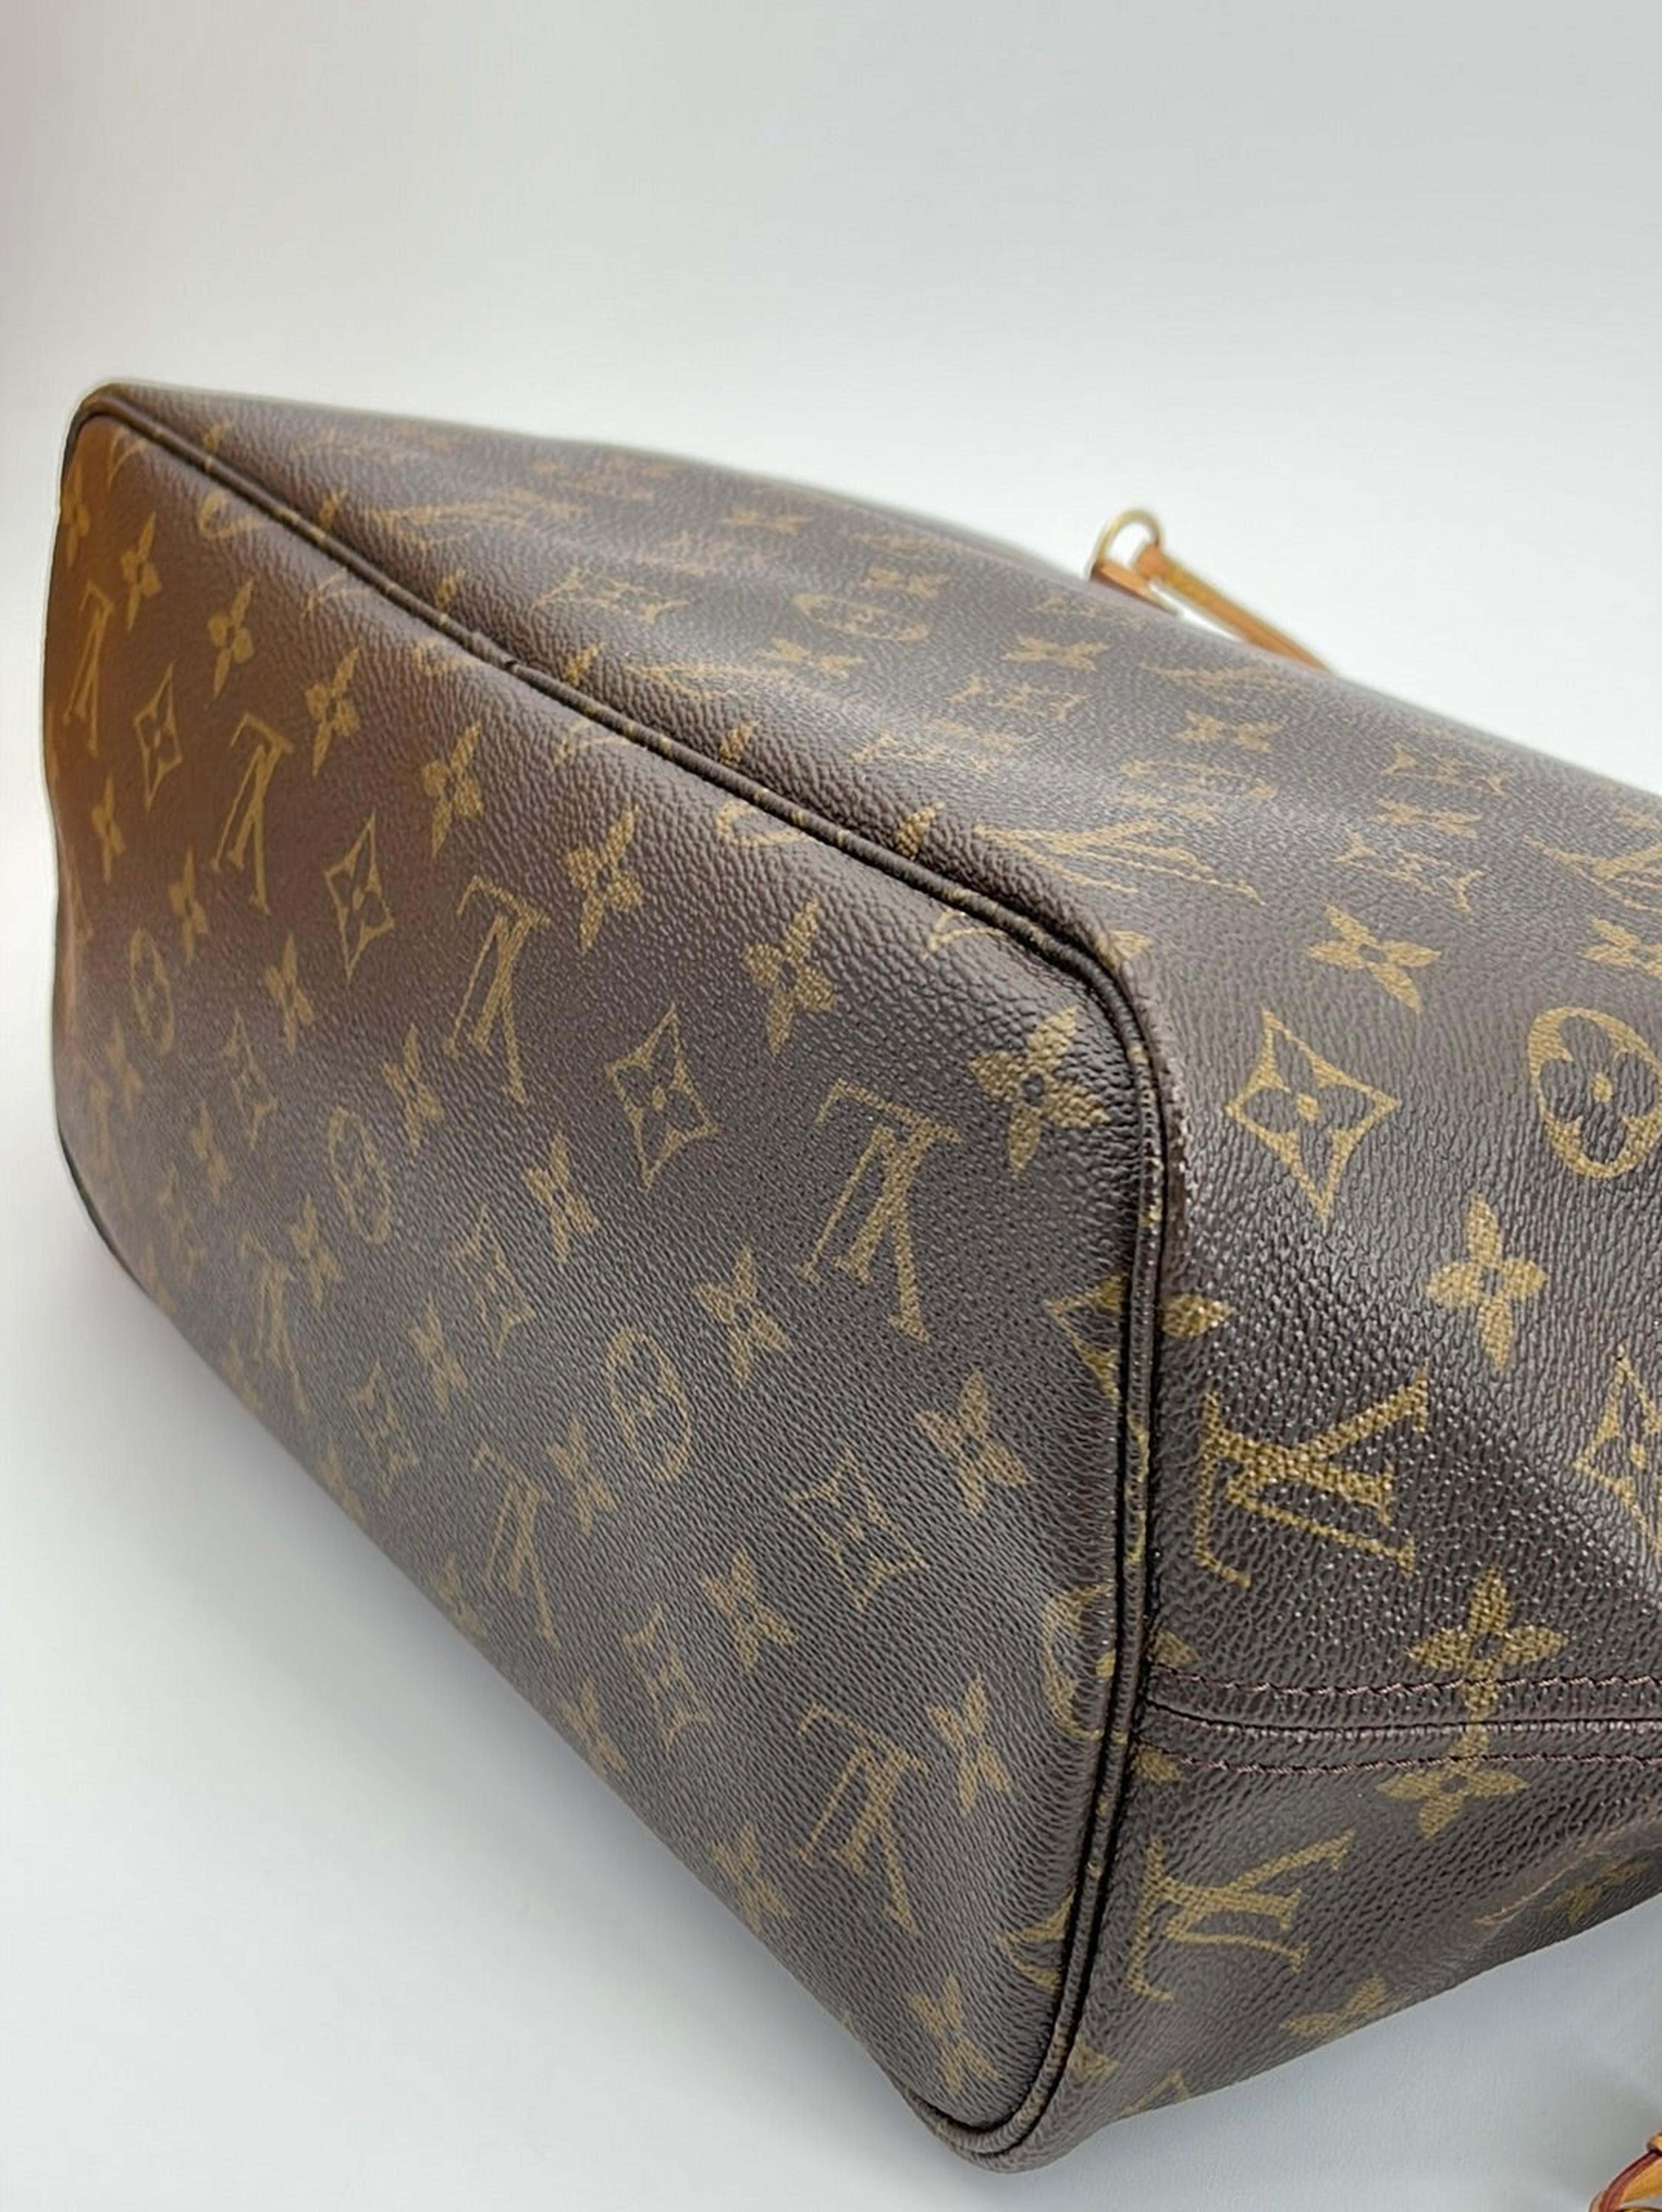 NTWRK - Preloved Louis Vuitton Monogram Neverfull MM Tote Bag (Tan